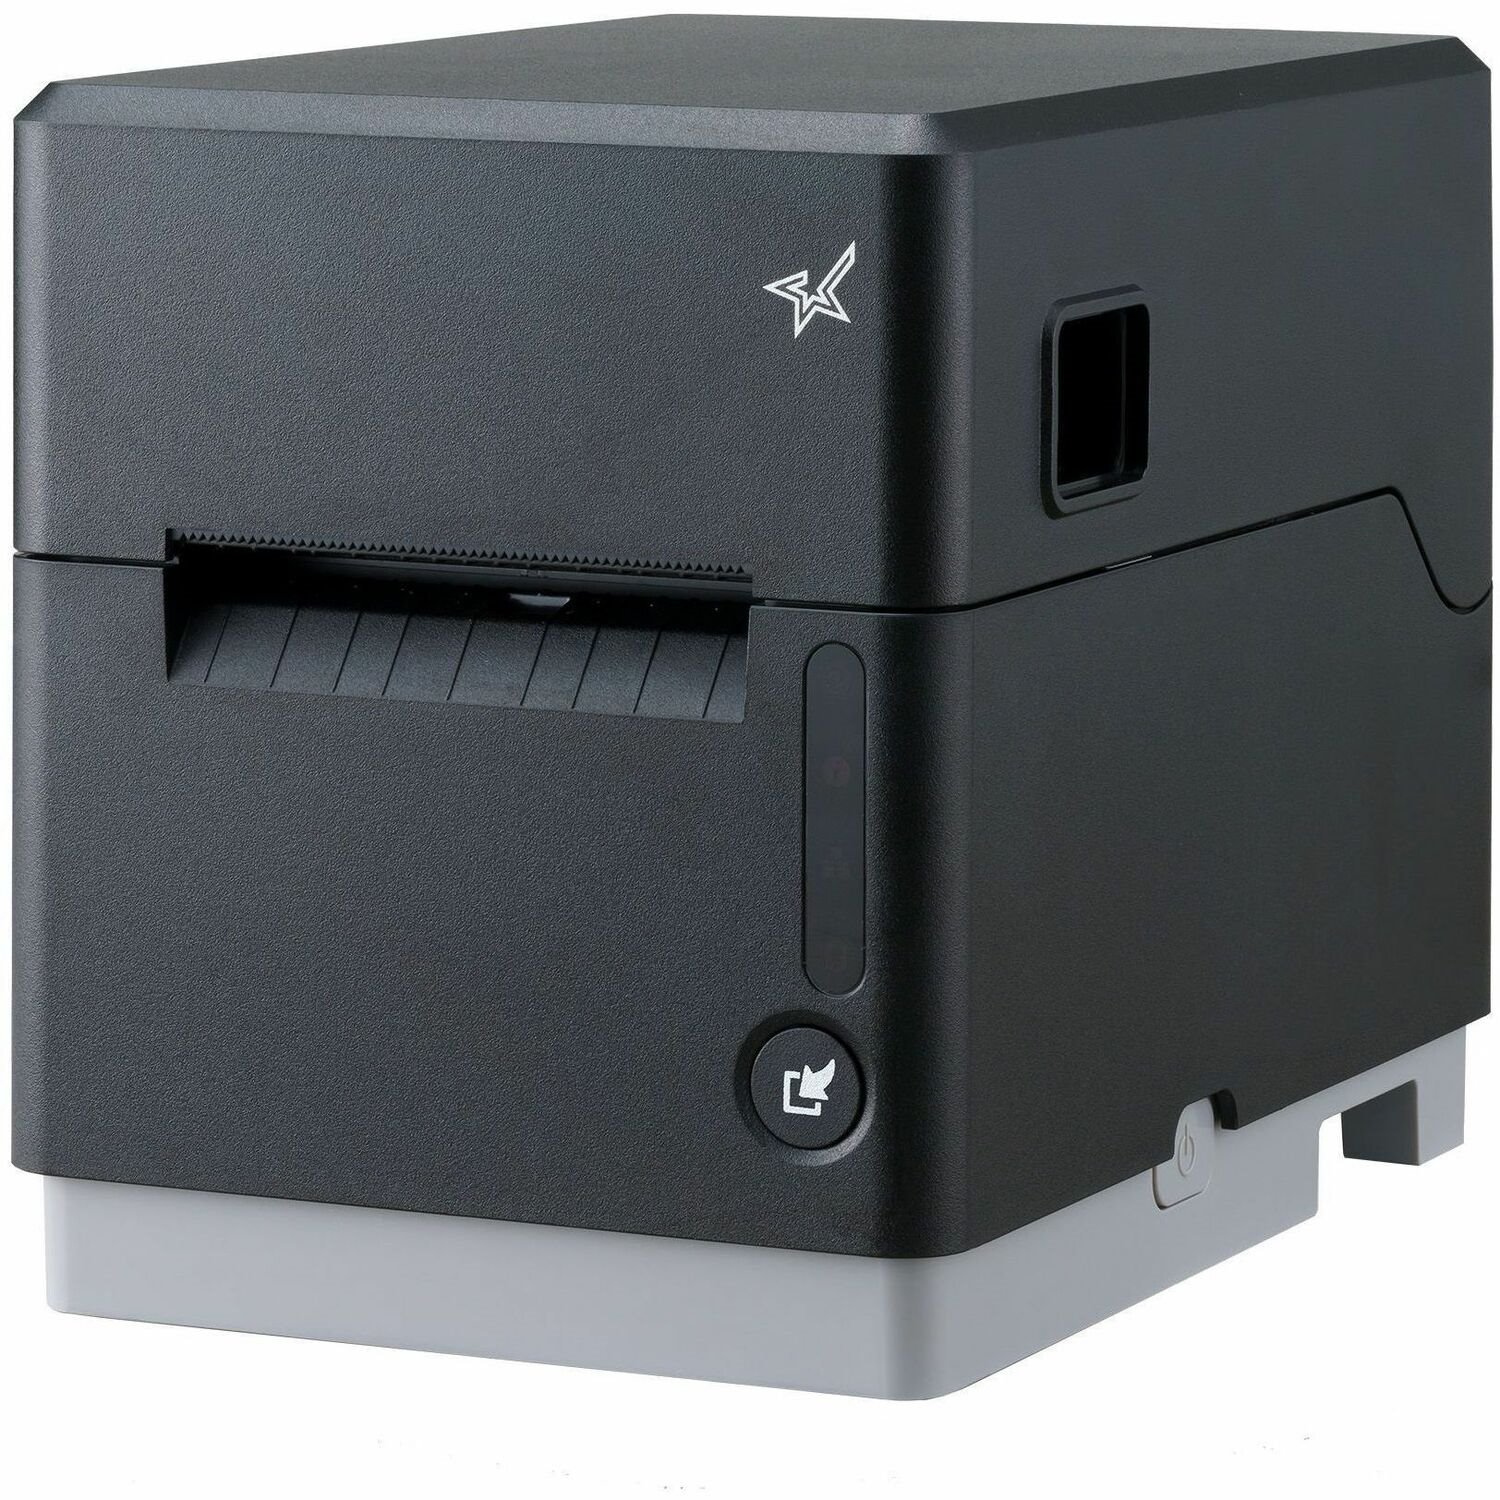 Star Micronics MCL32WCBi Direct Thermal Printer - Monochrome - Receipt Print - USB - Bluetooth - Wireless LAN - US - With Cutter - Black